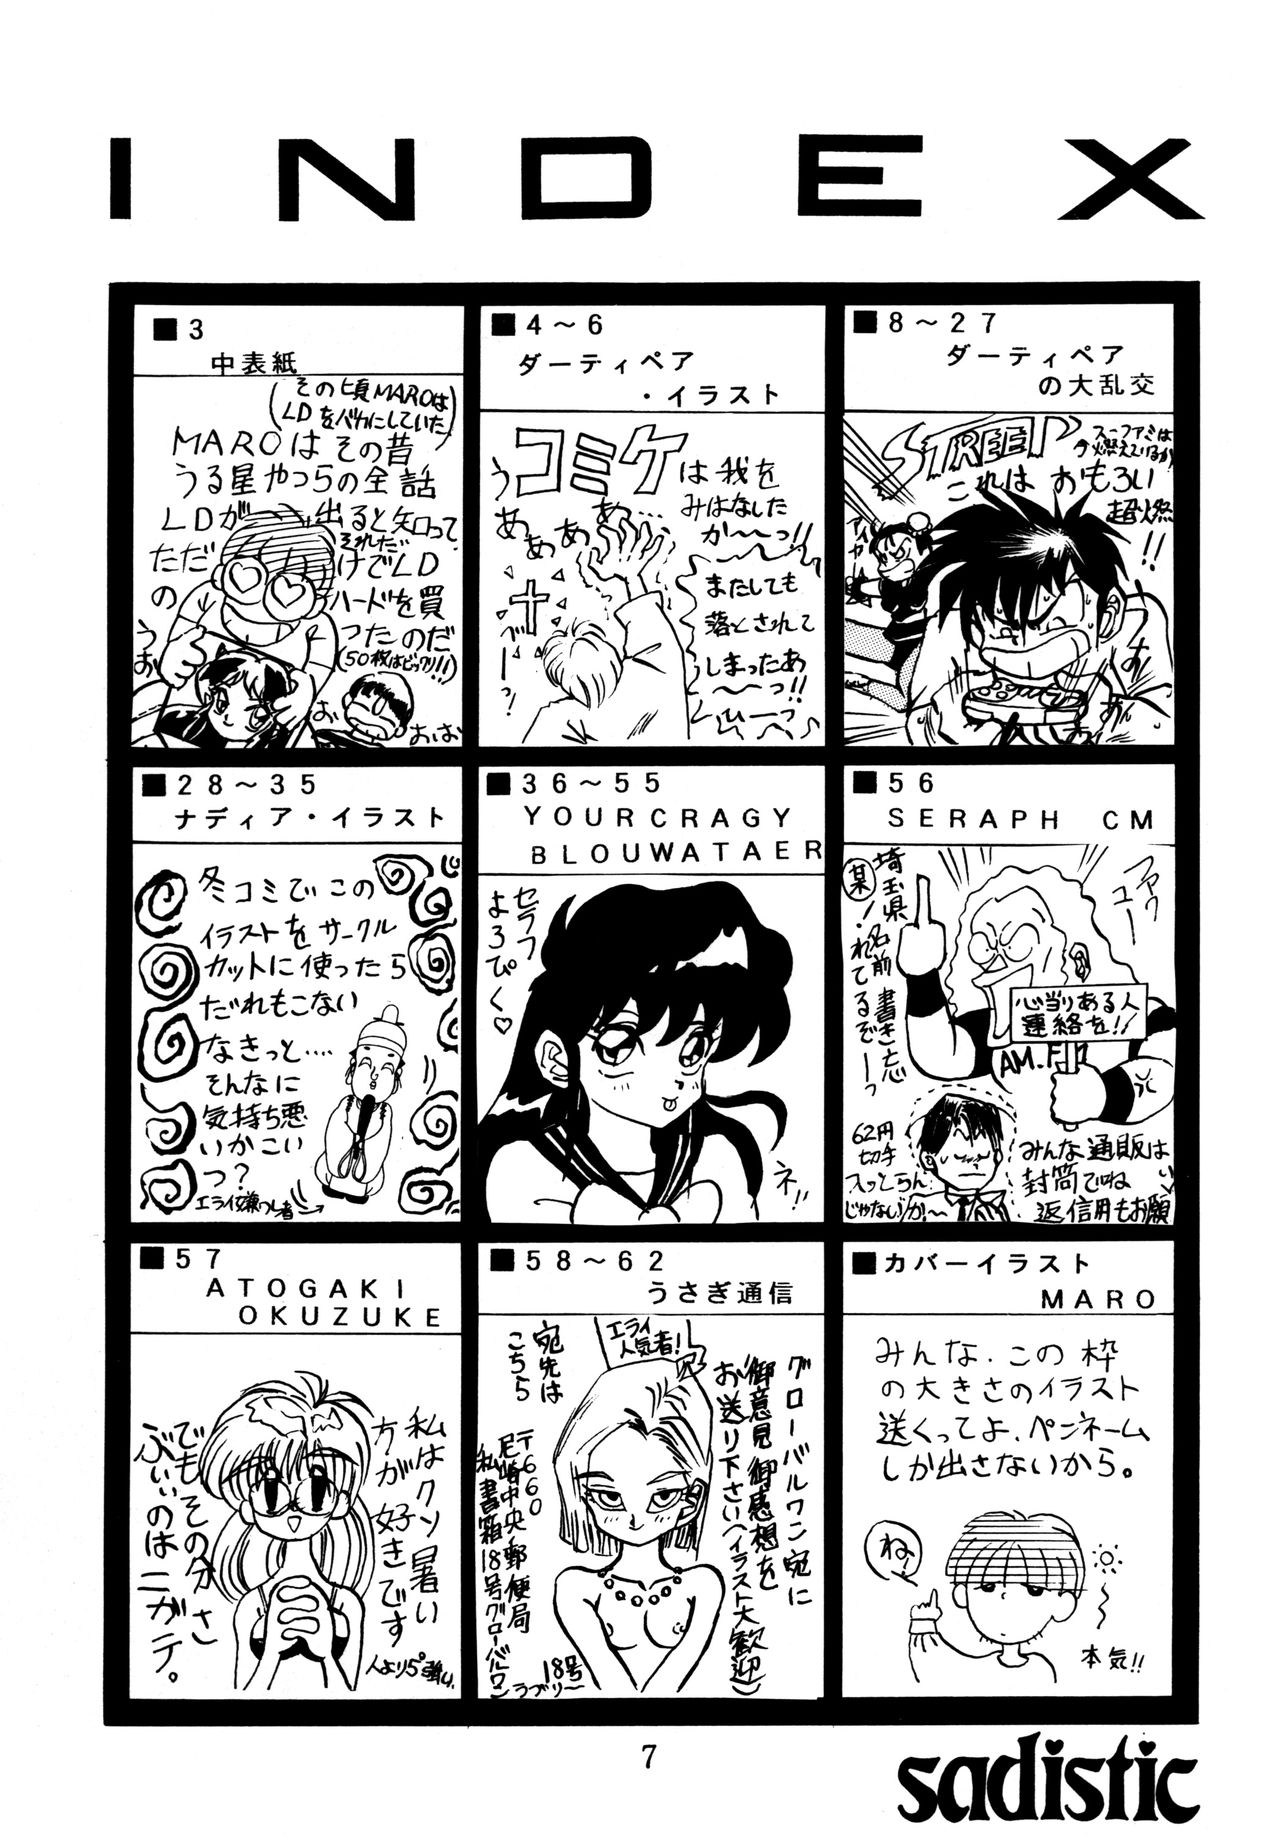 [Global One (MARO)] Sadistic 4 (Dirty Pair, Fushigi no Umi no Nadia, Bishoujo Senshi Sailor Moon) 5